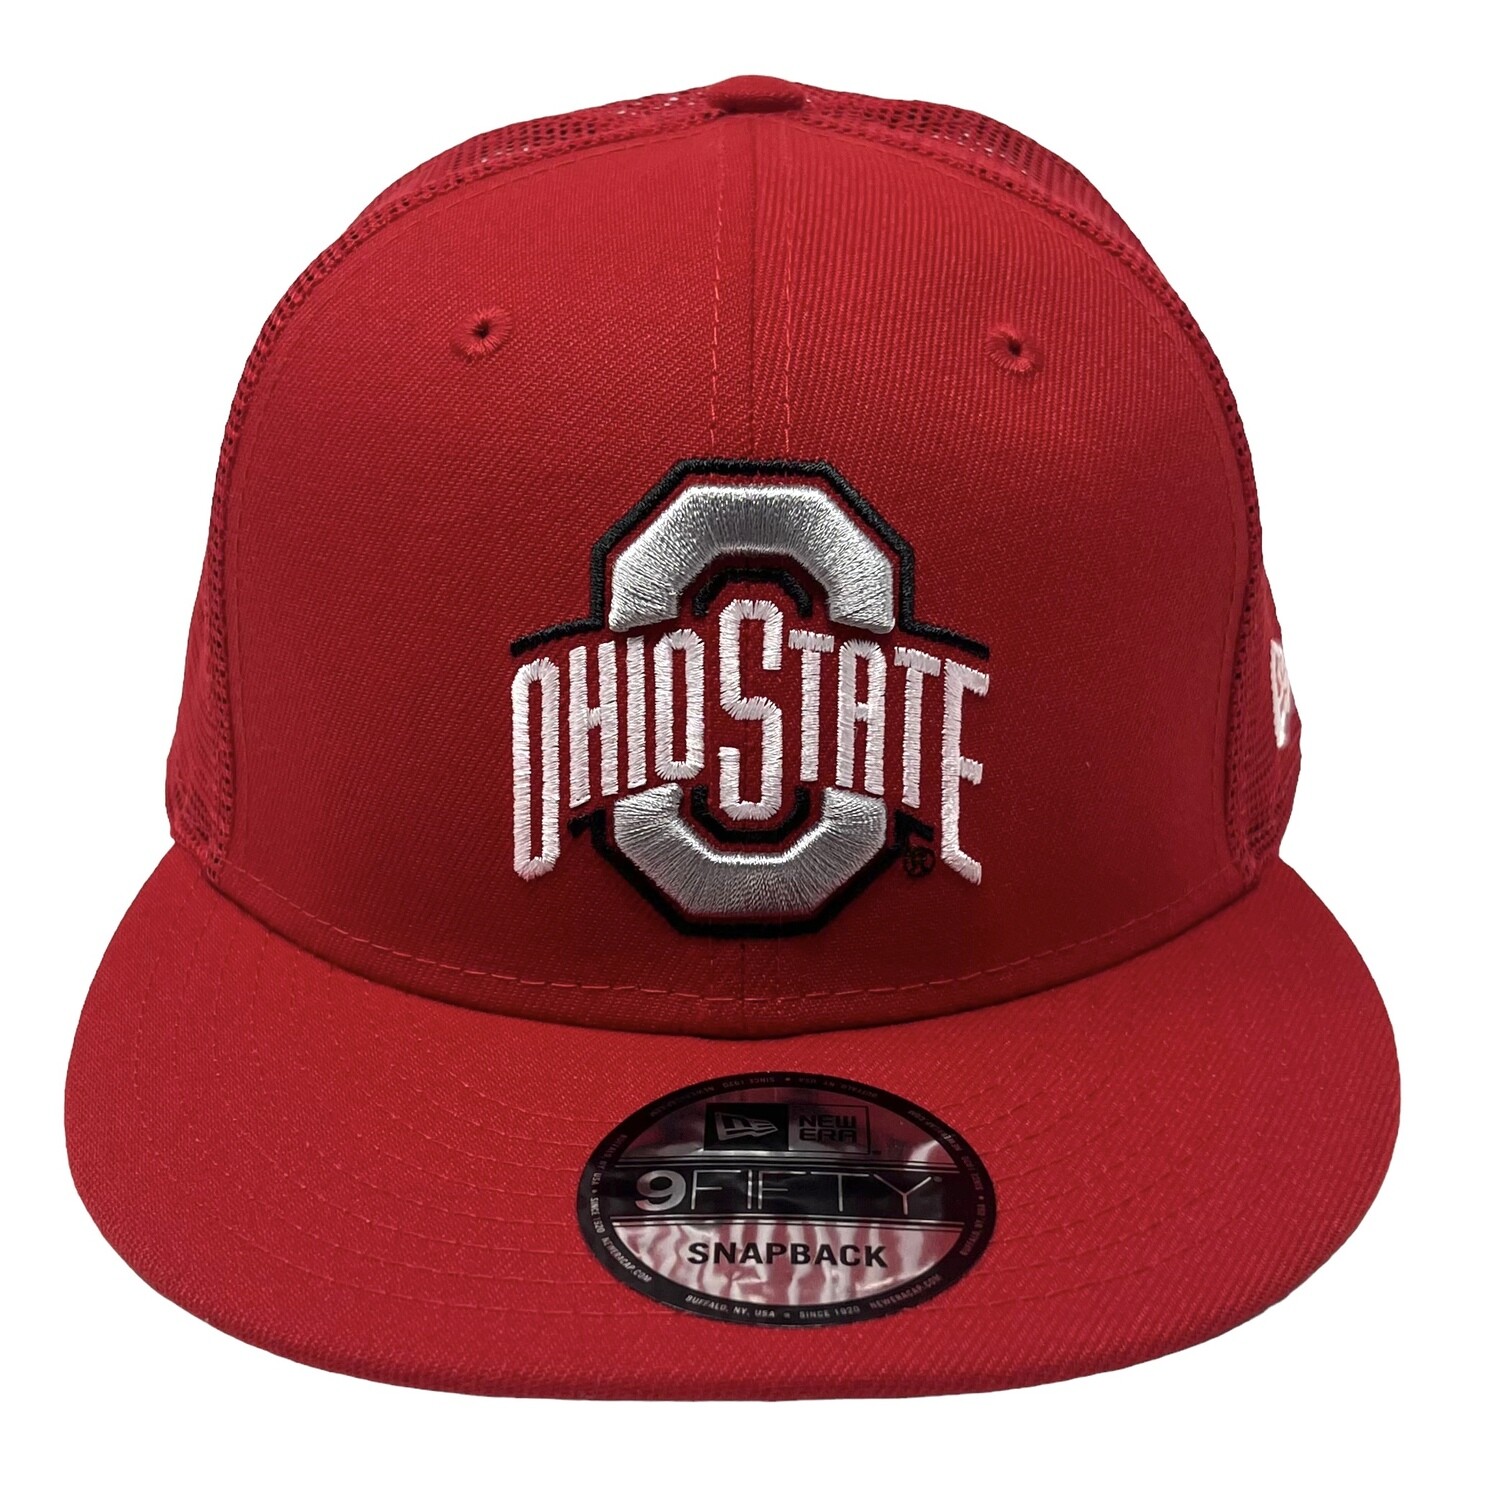 Ohio State Buckeyes New Era Adjustable Trucker Hat